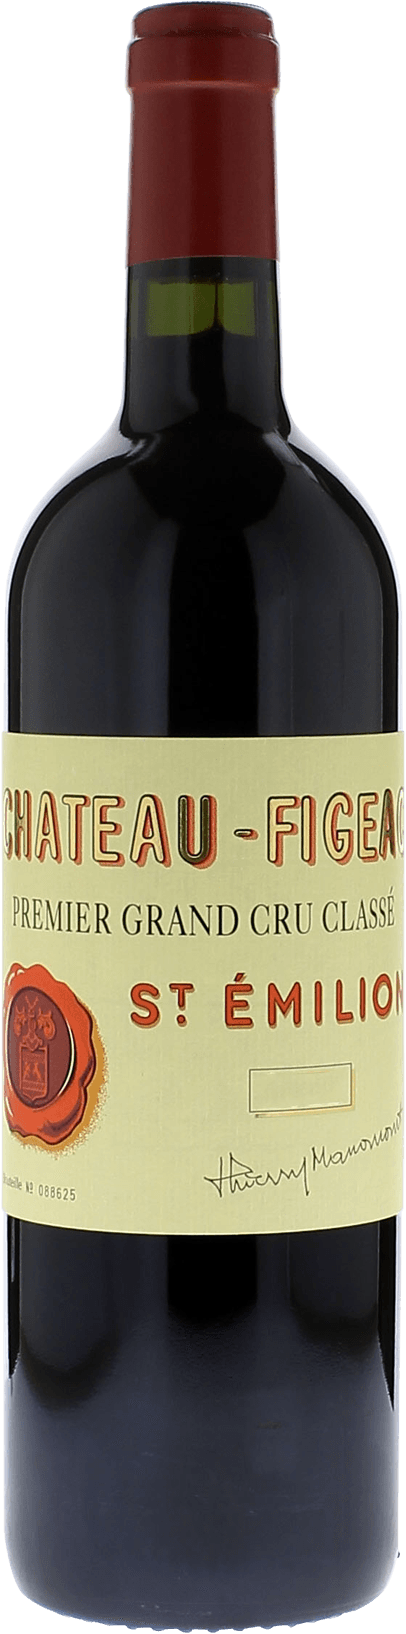 Figeac 2001 1er Grand cru B class Saint-Emilion, Bordeaux rouge